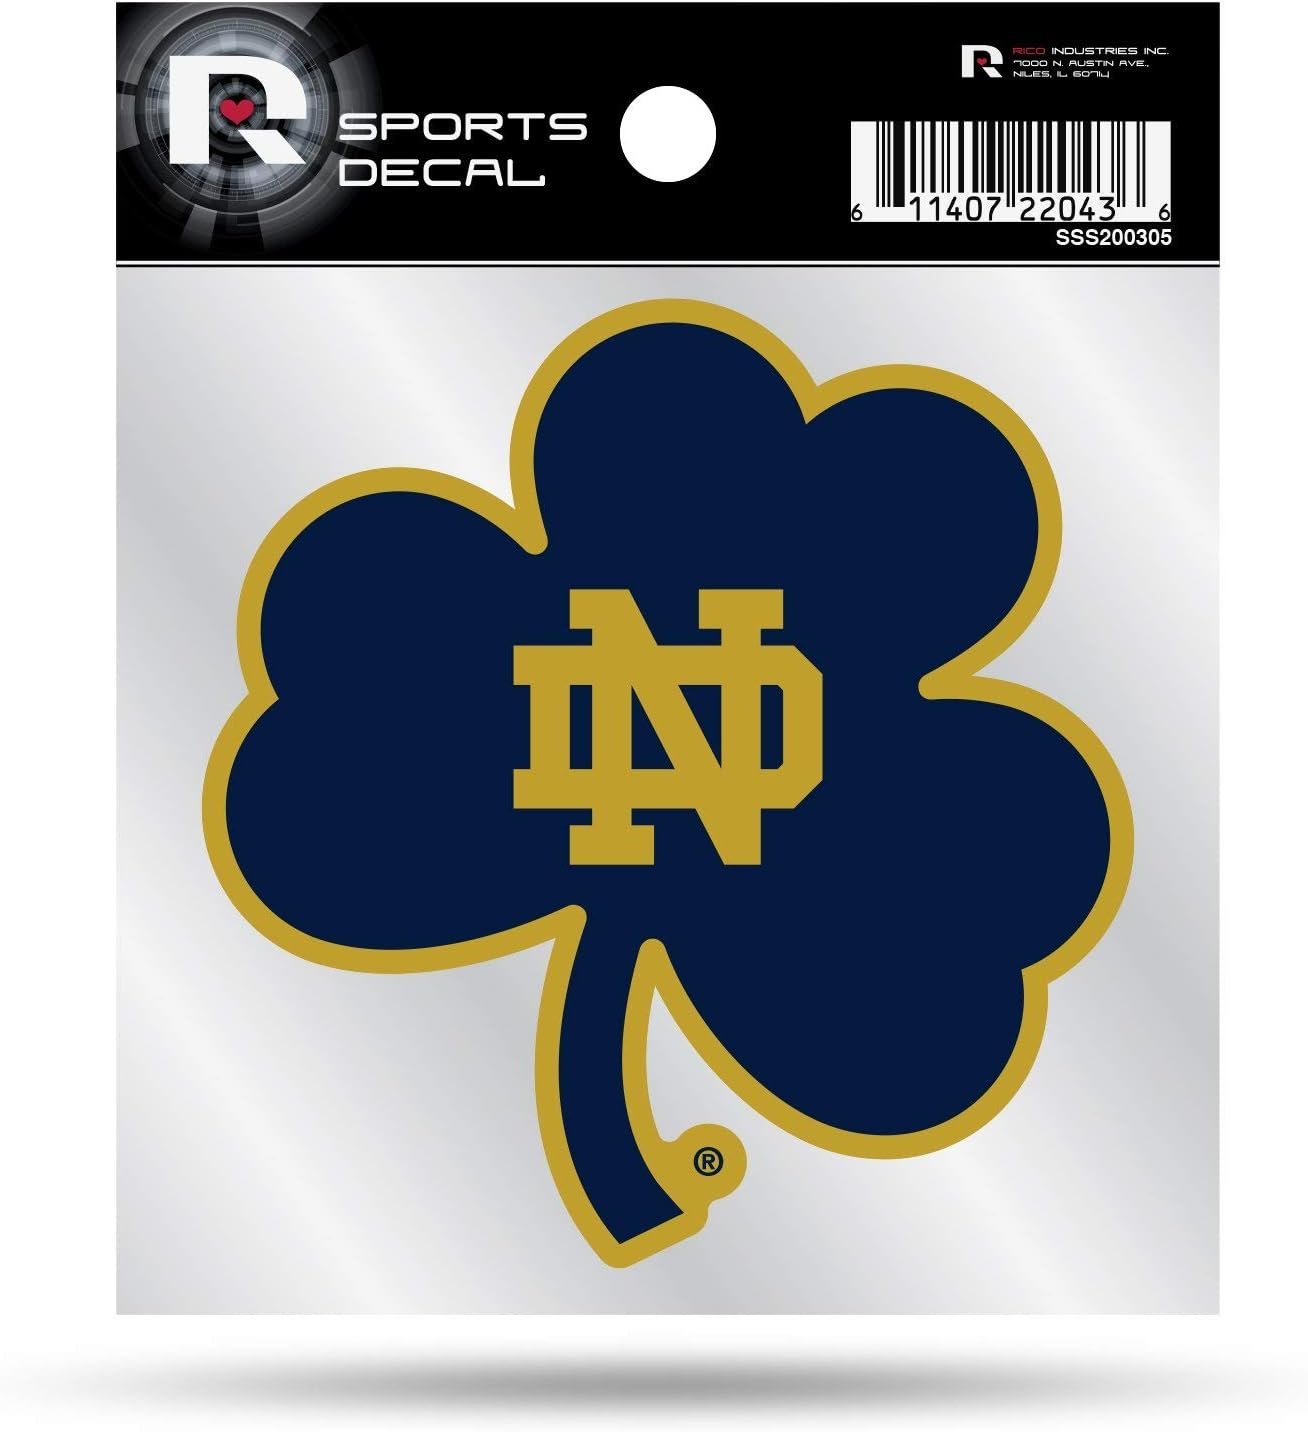 University of Notre Dame Fighting Irish 4x4 Inch Die Cut Decal Sticker, Blue Shamrock Logo, Clear Backing